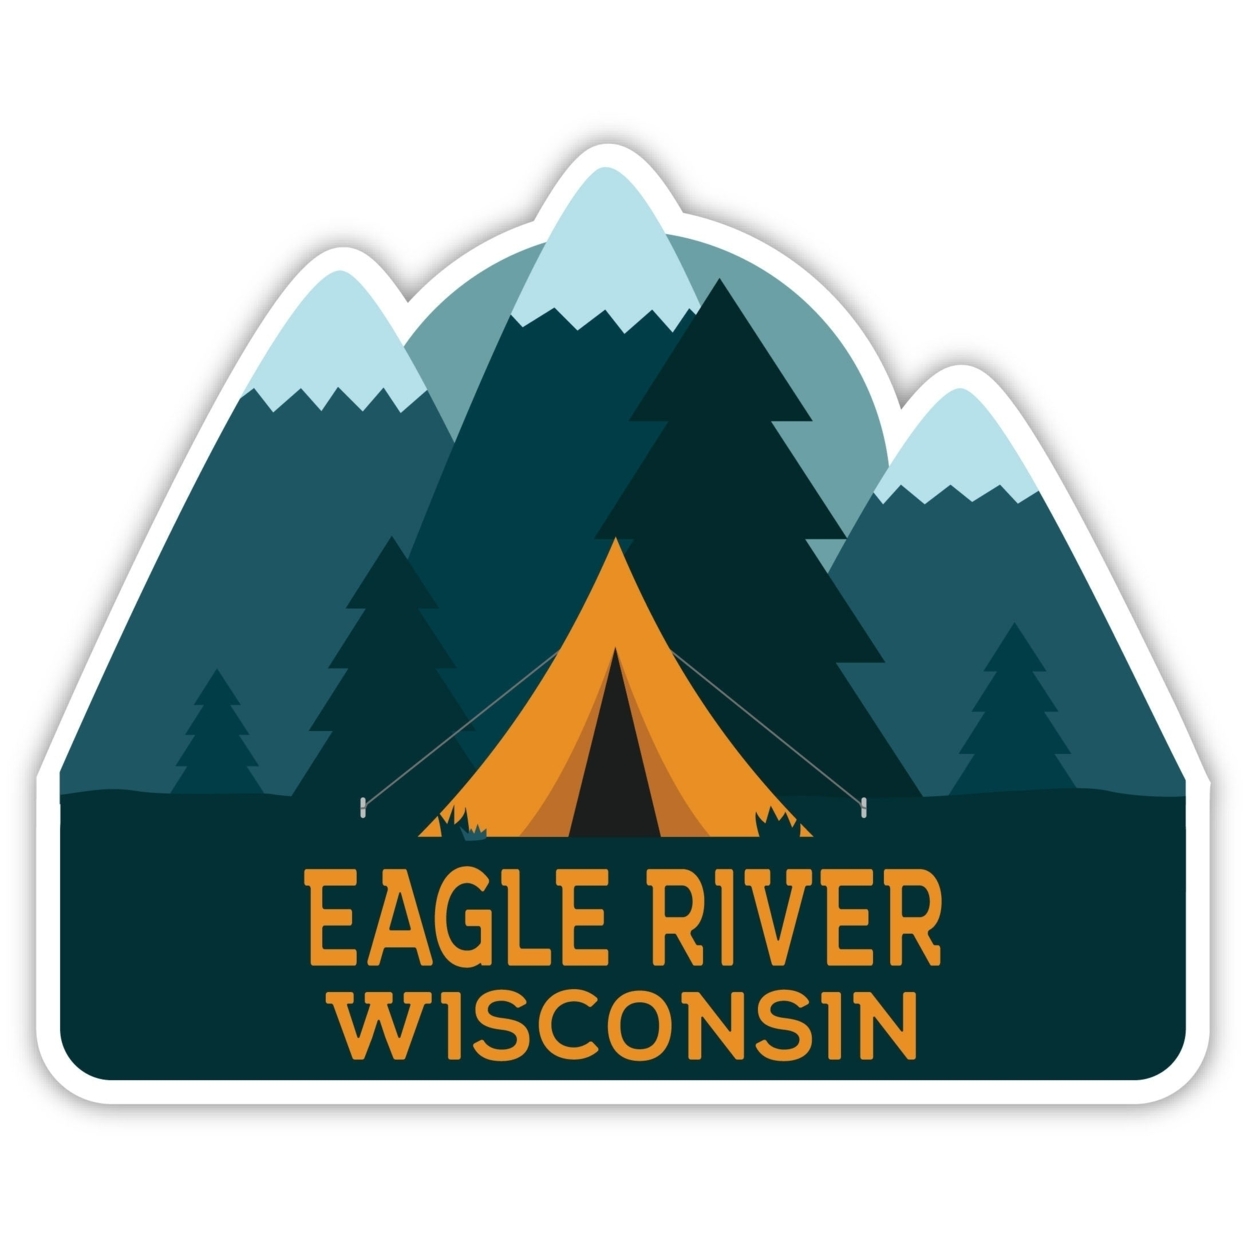 Eagle River Wisconsin Souvenir Decorative Stickers (Choose Theme And Size) - Single Unit, 12-Inch, Adventures Awaits